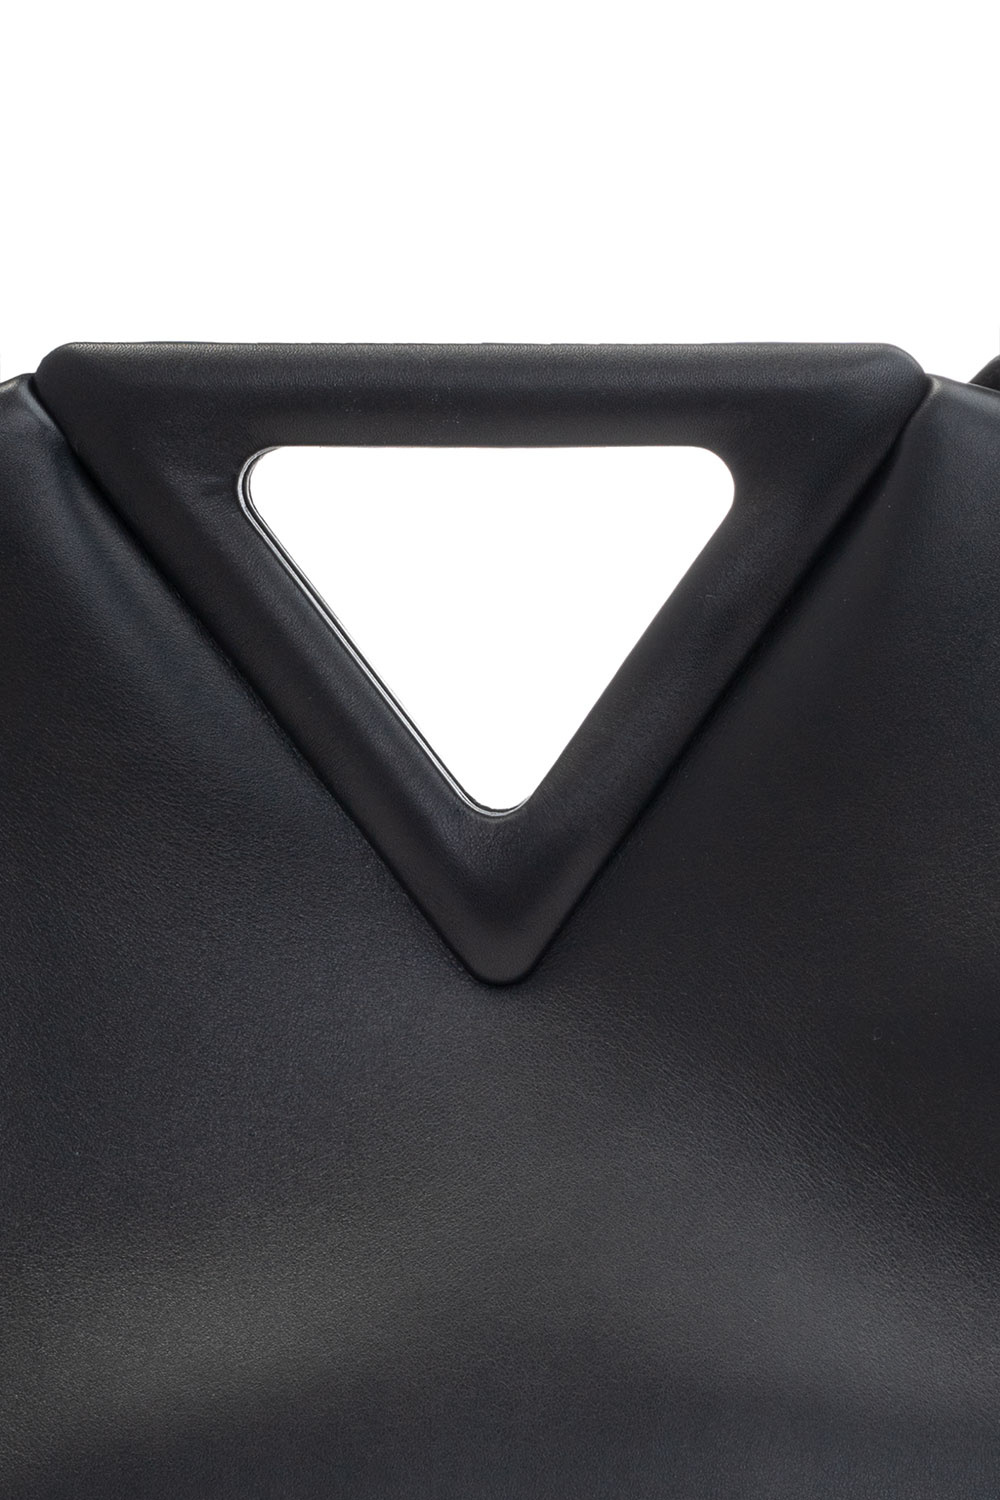 Bottega Veneta ‘The Triangle’ shoulder bag